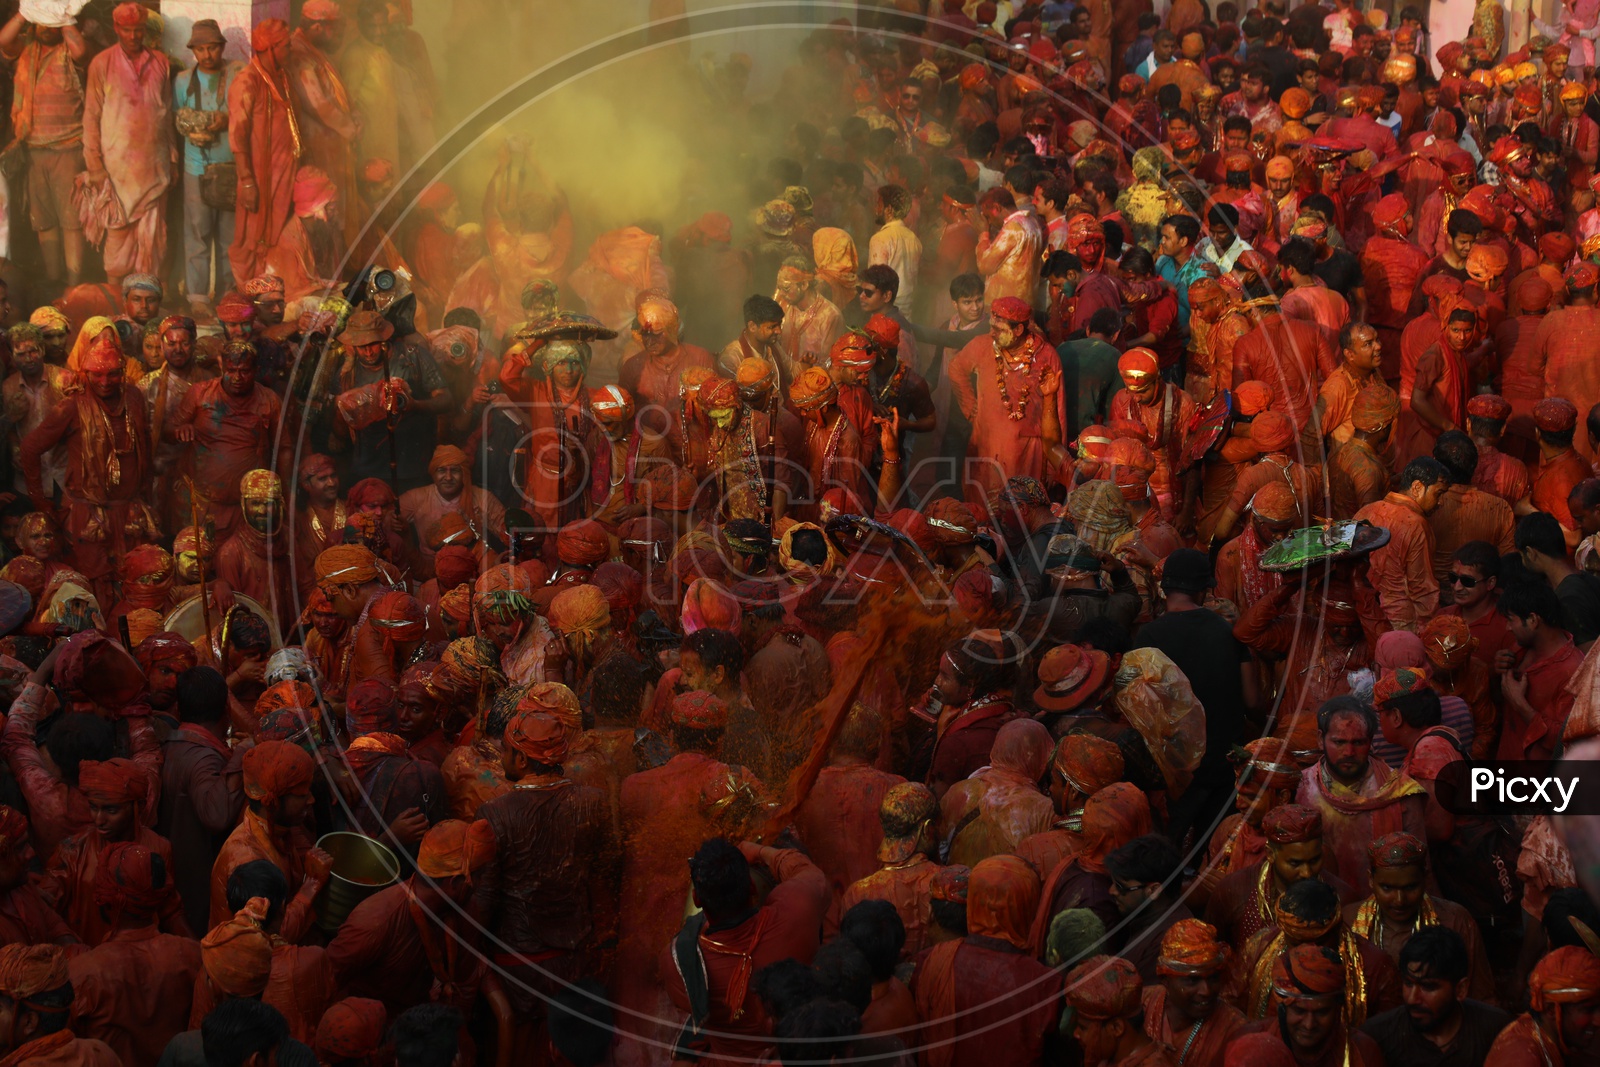 Holi Celebrations - Indian Festival - Colors/Colorful at Nandagaon